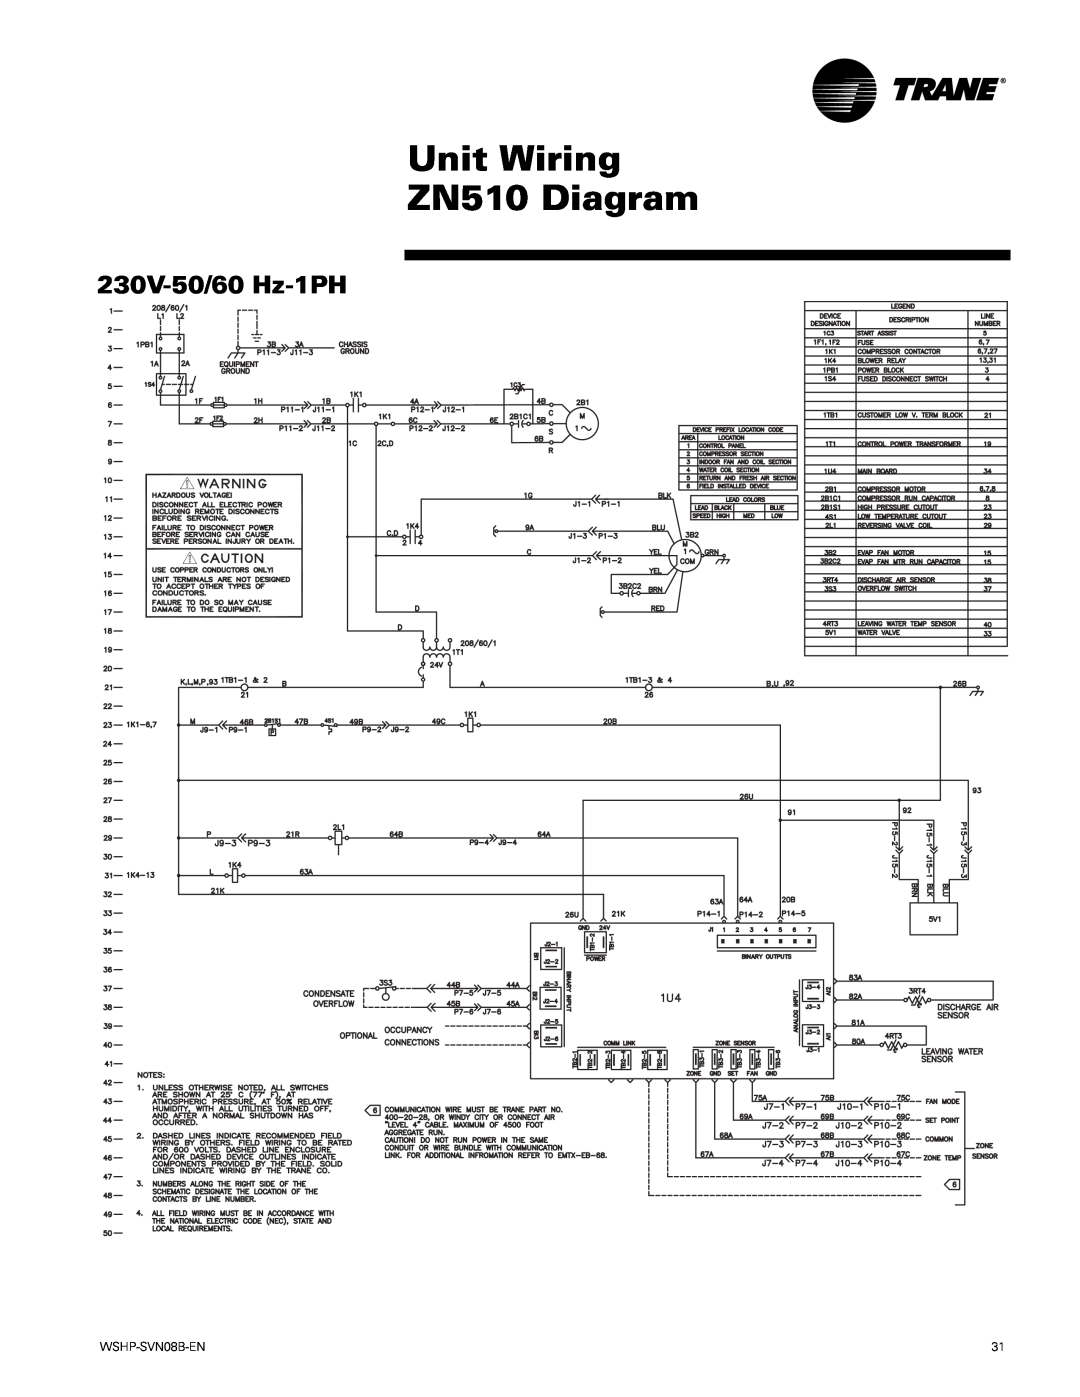 Trane GETB manual Unit Wiring ZN510 Diagram, 230V-50/60 Hz-1PH 